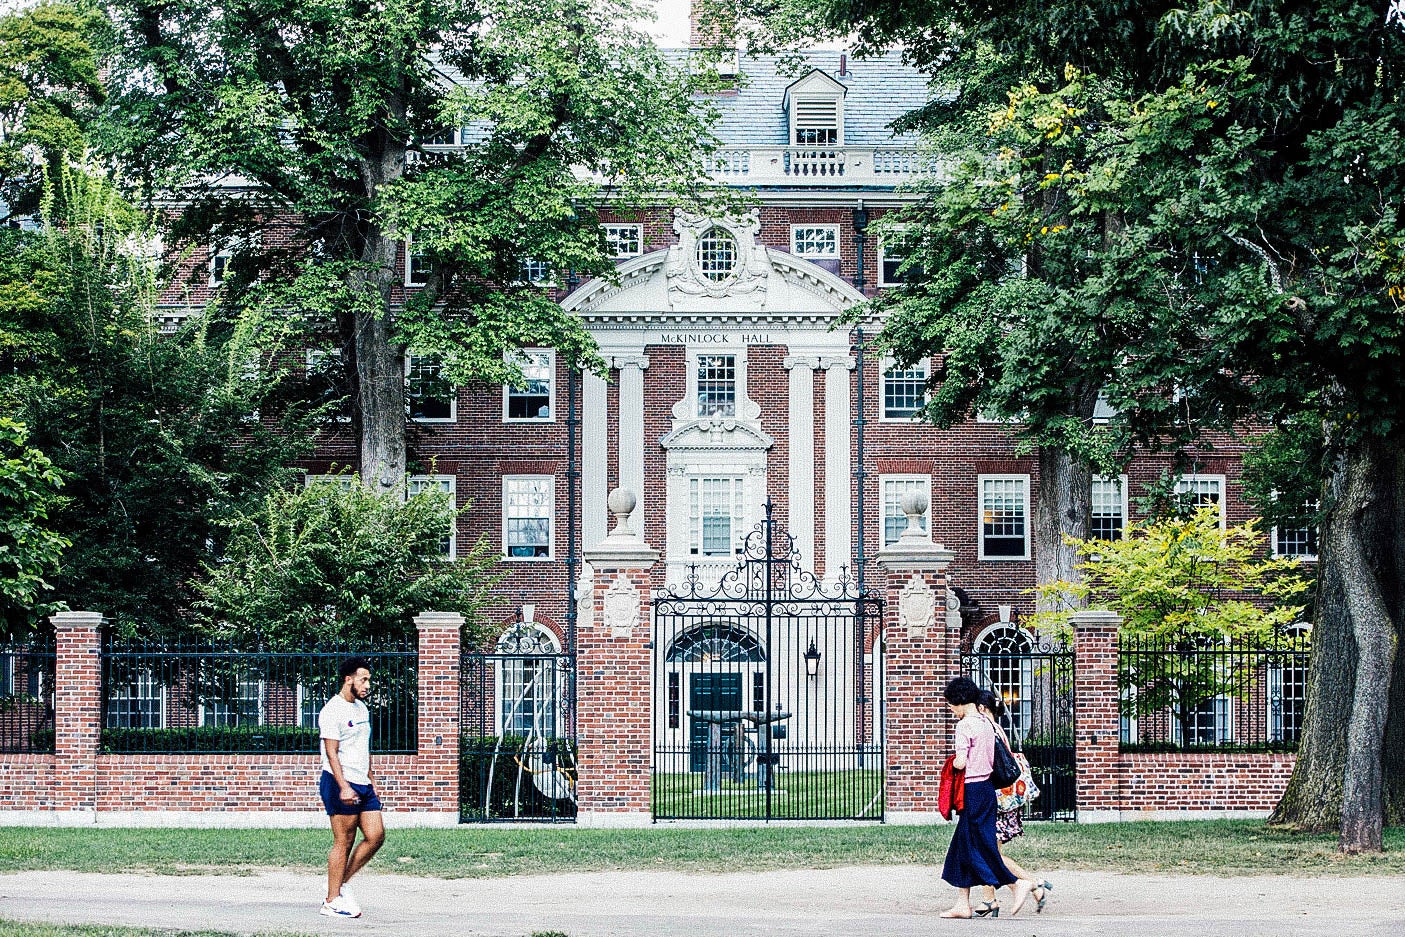 Pedestrians walk past a Harvard University building.